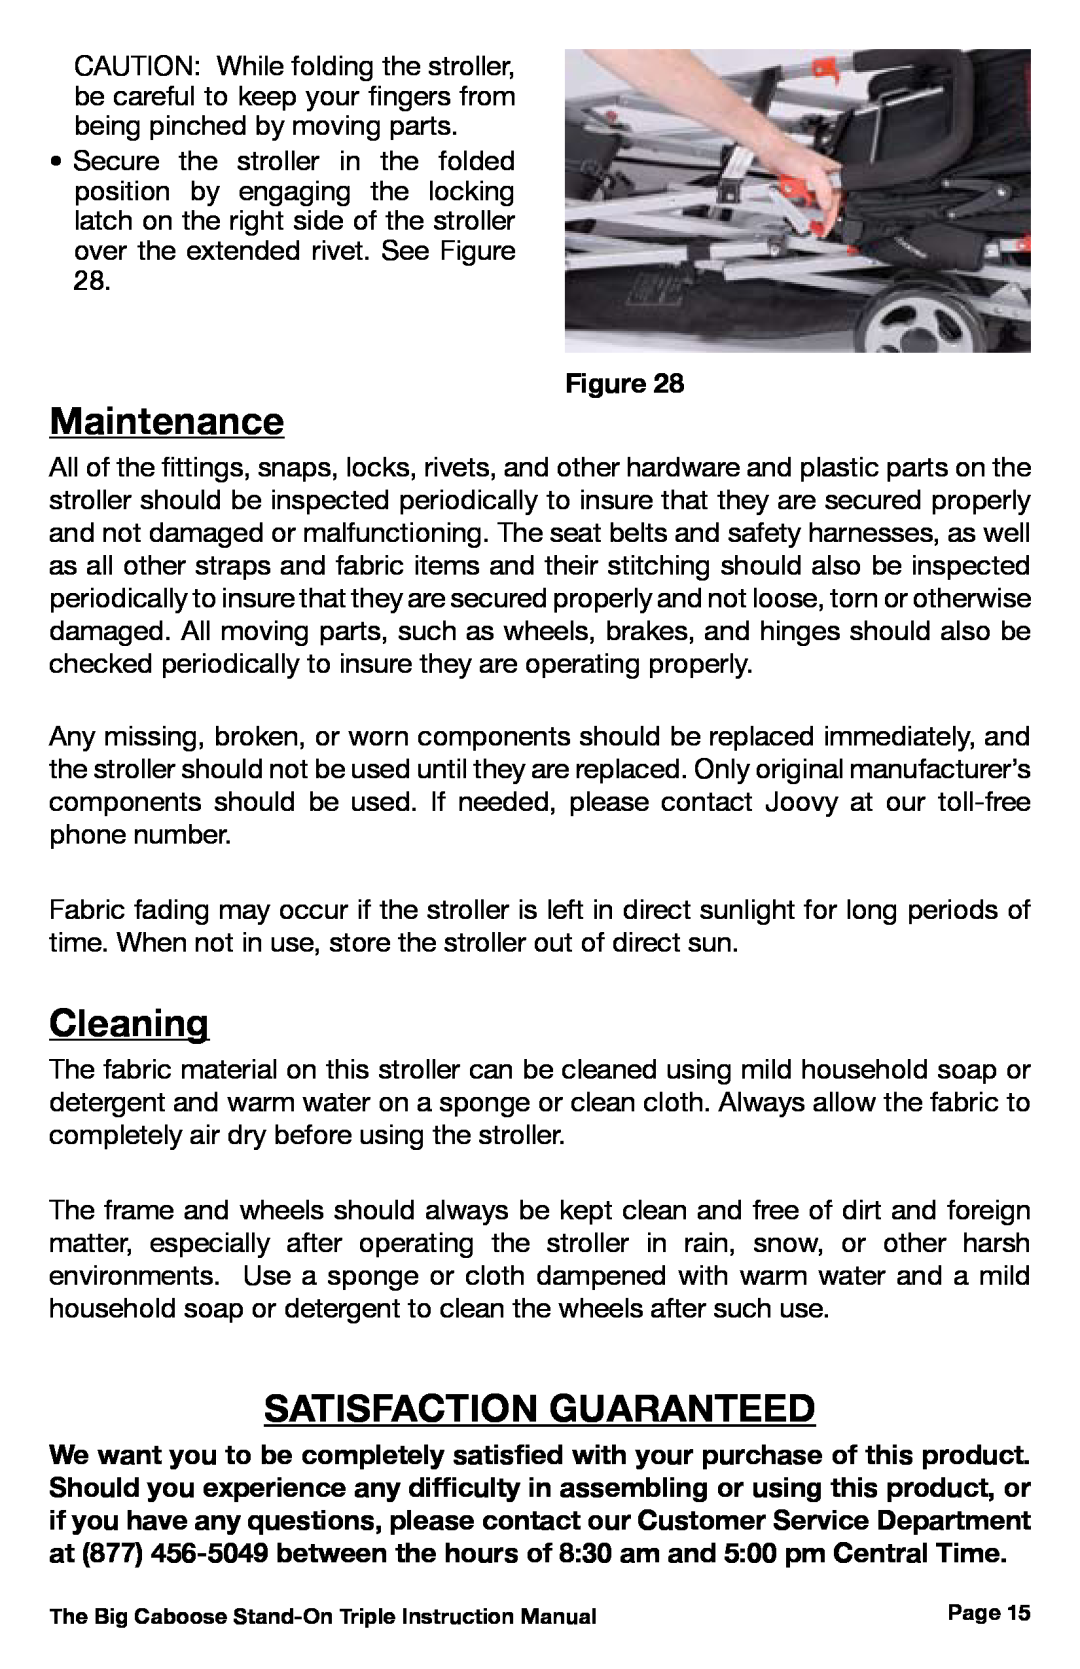 Chicco 431, 430, 437 manual Maintenance, Cleaning, Satisfaction Guaranteed, Figure 8 